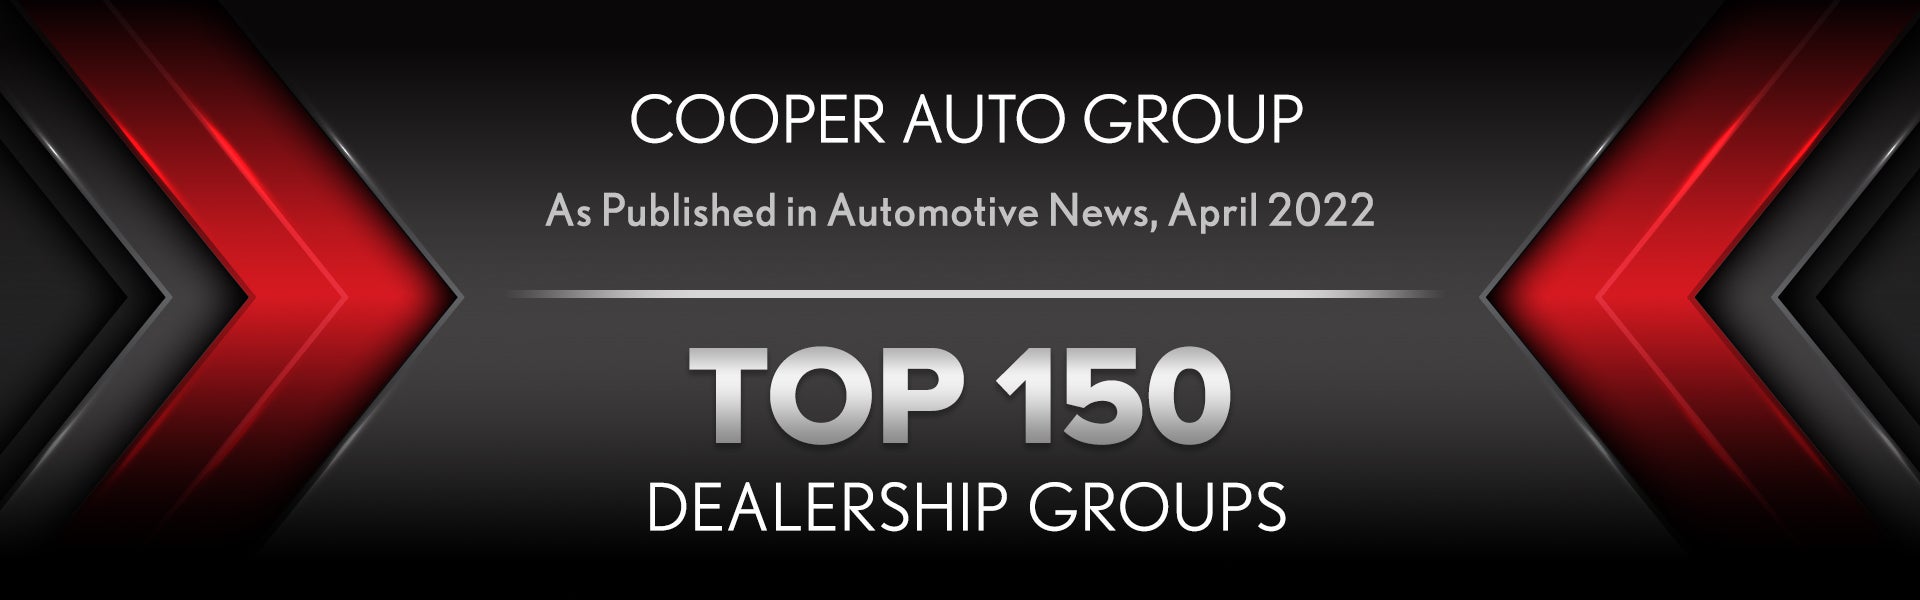 Top 150 Dealership Group Edmond OK